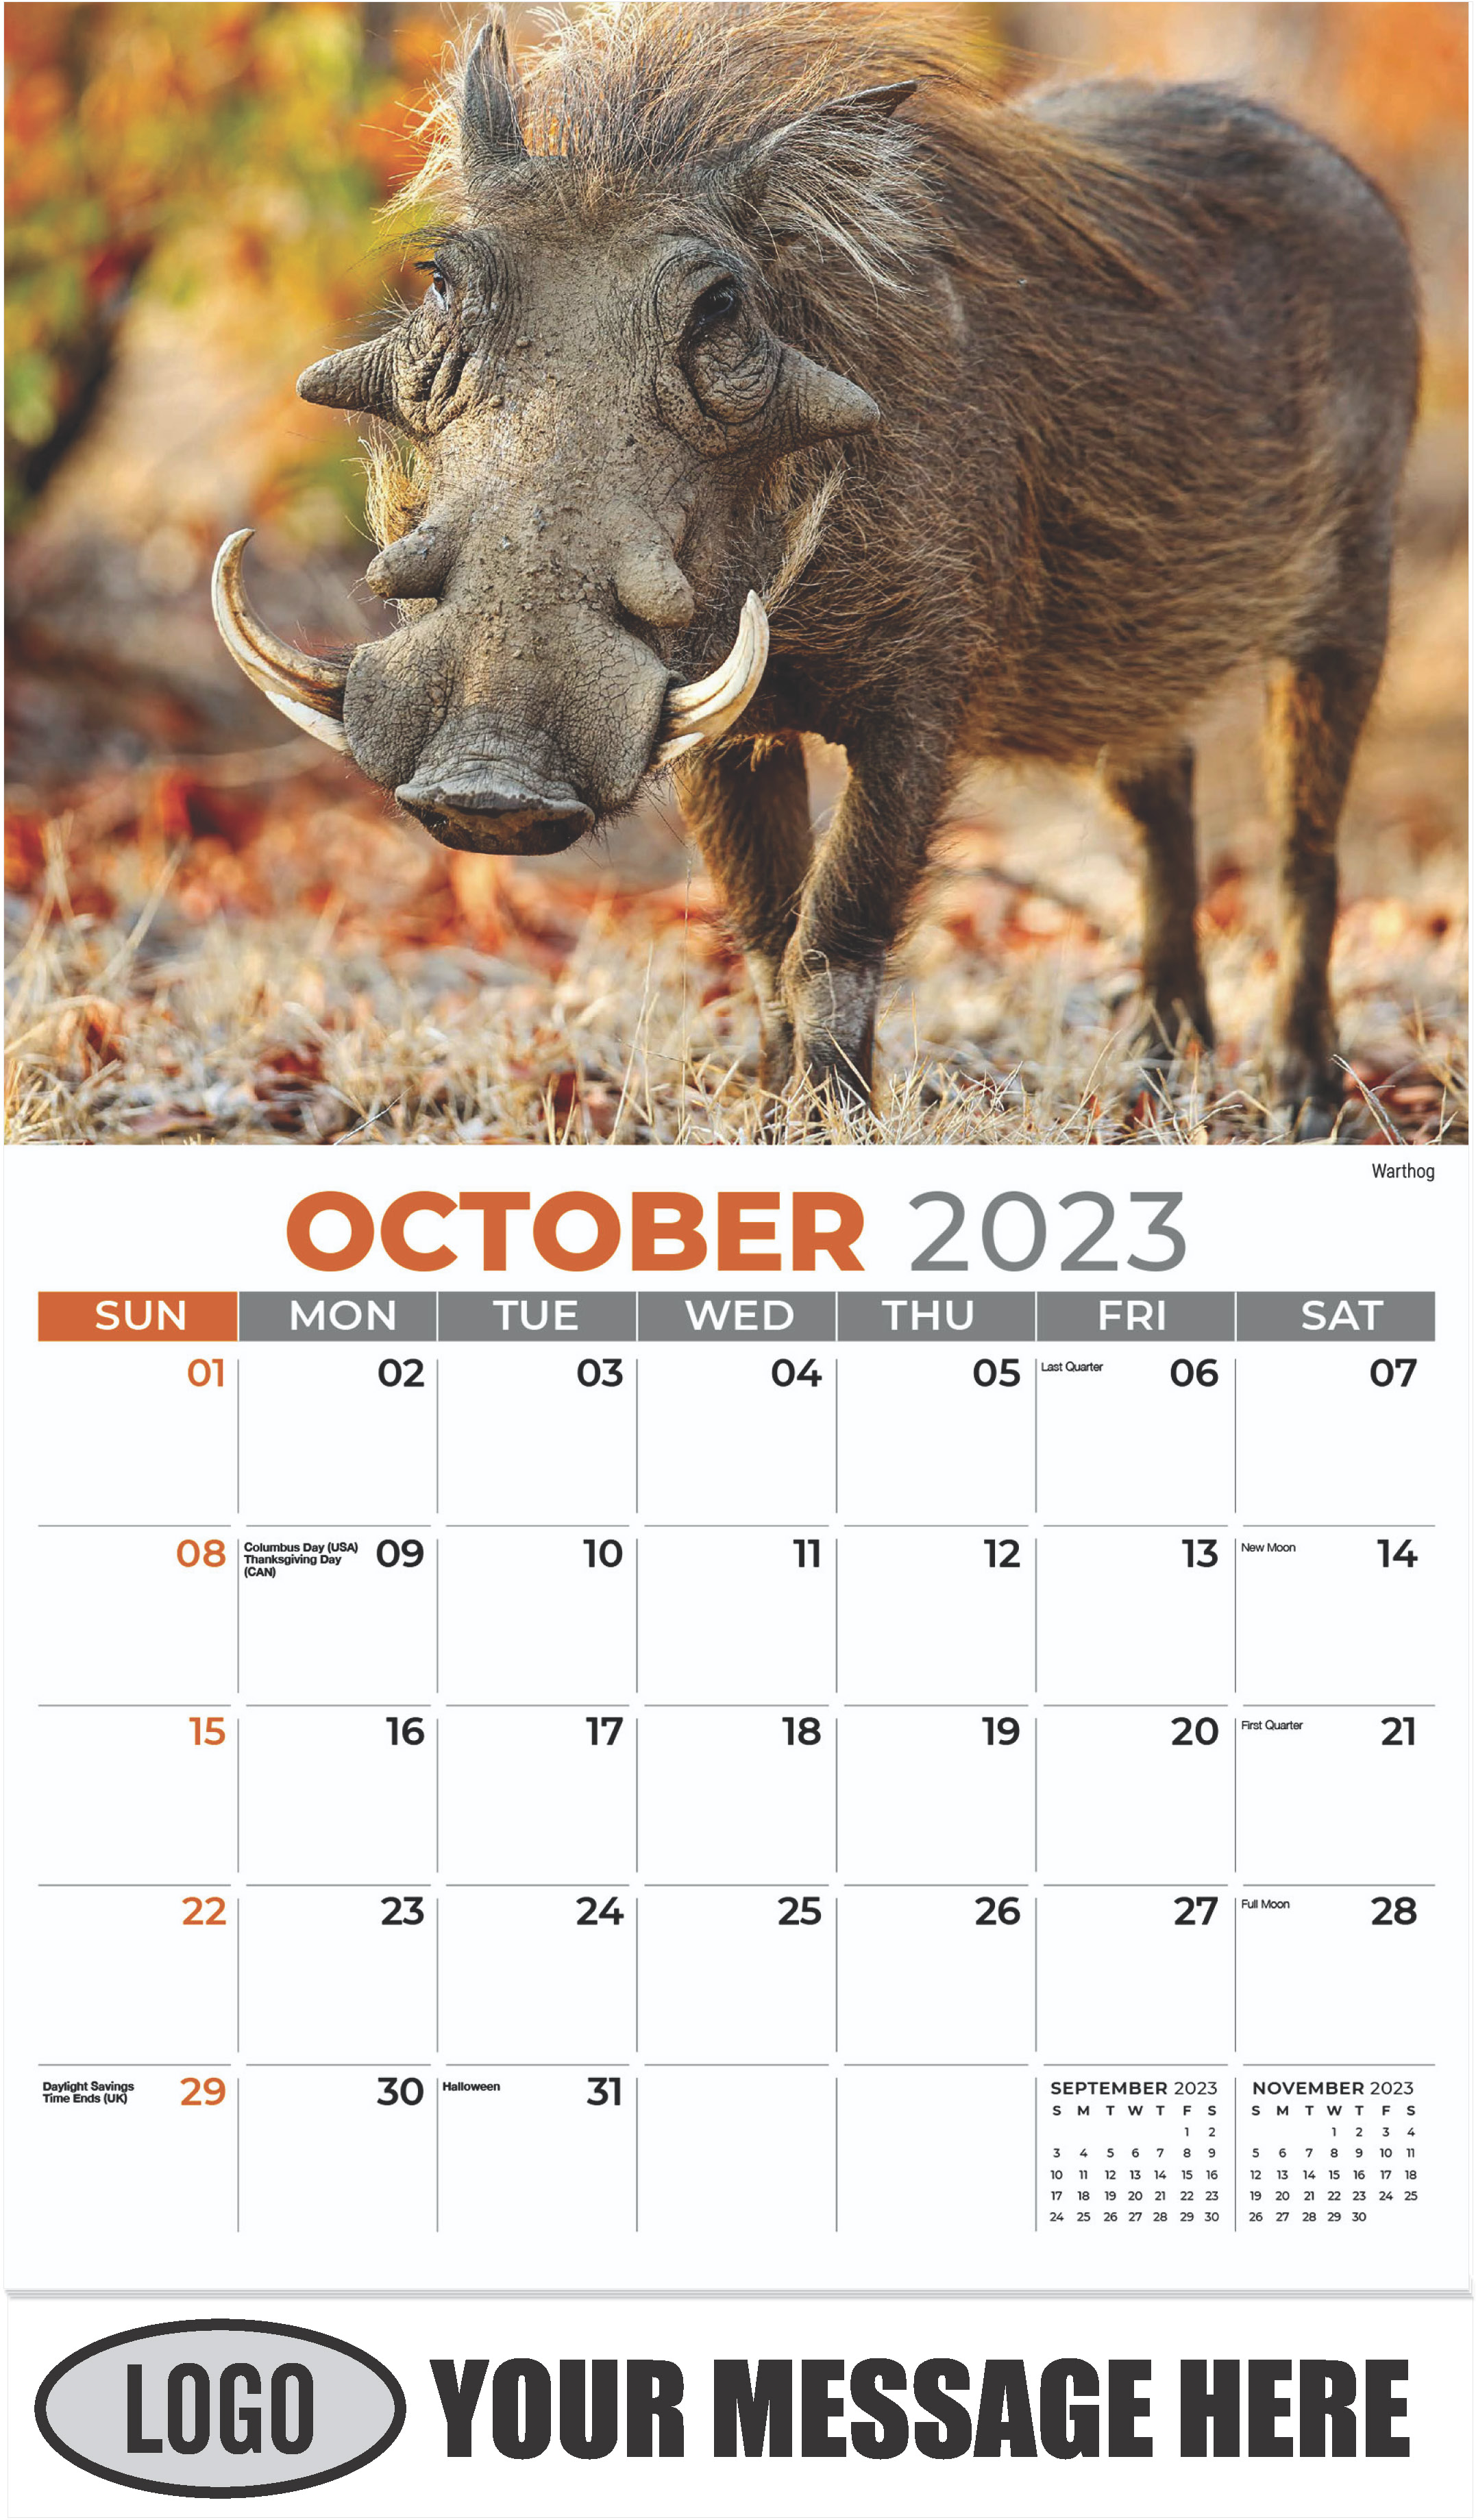 Warthog - October - International Wildlife 2023 Promotional Calendar